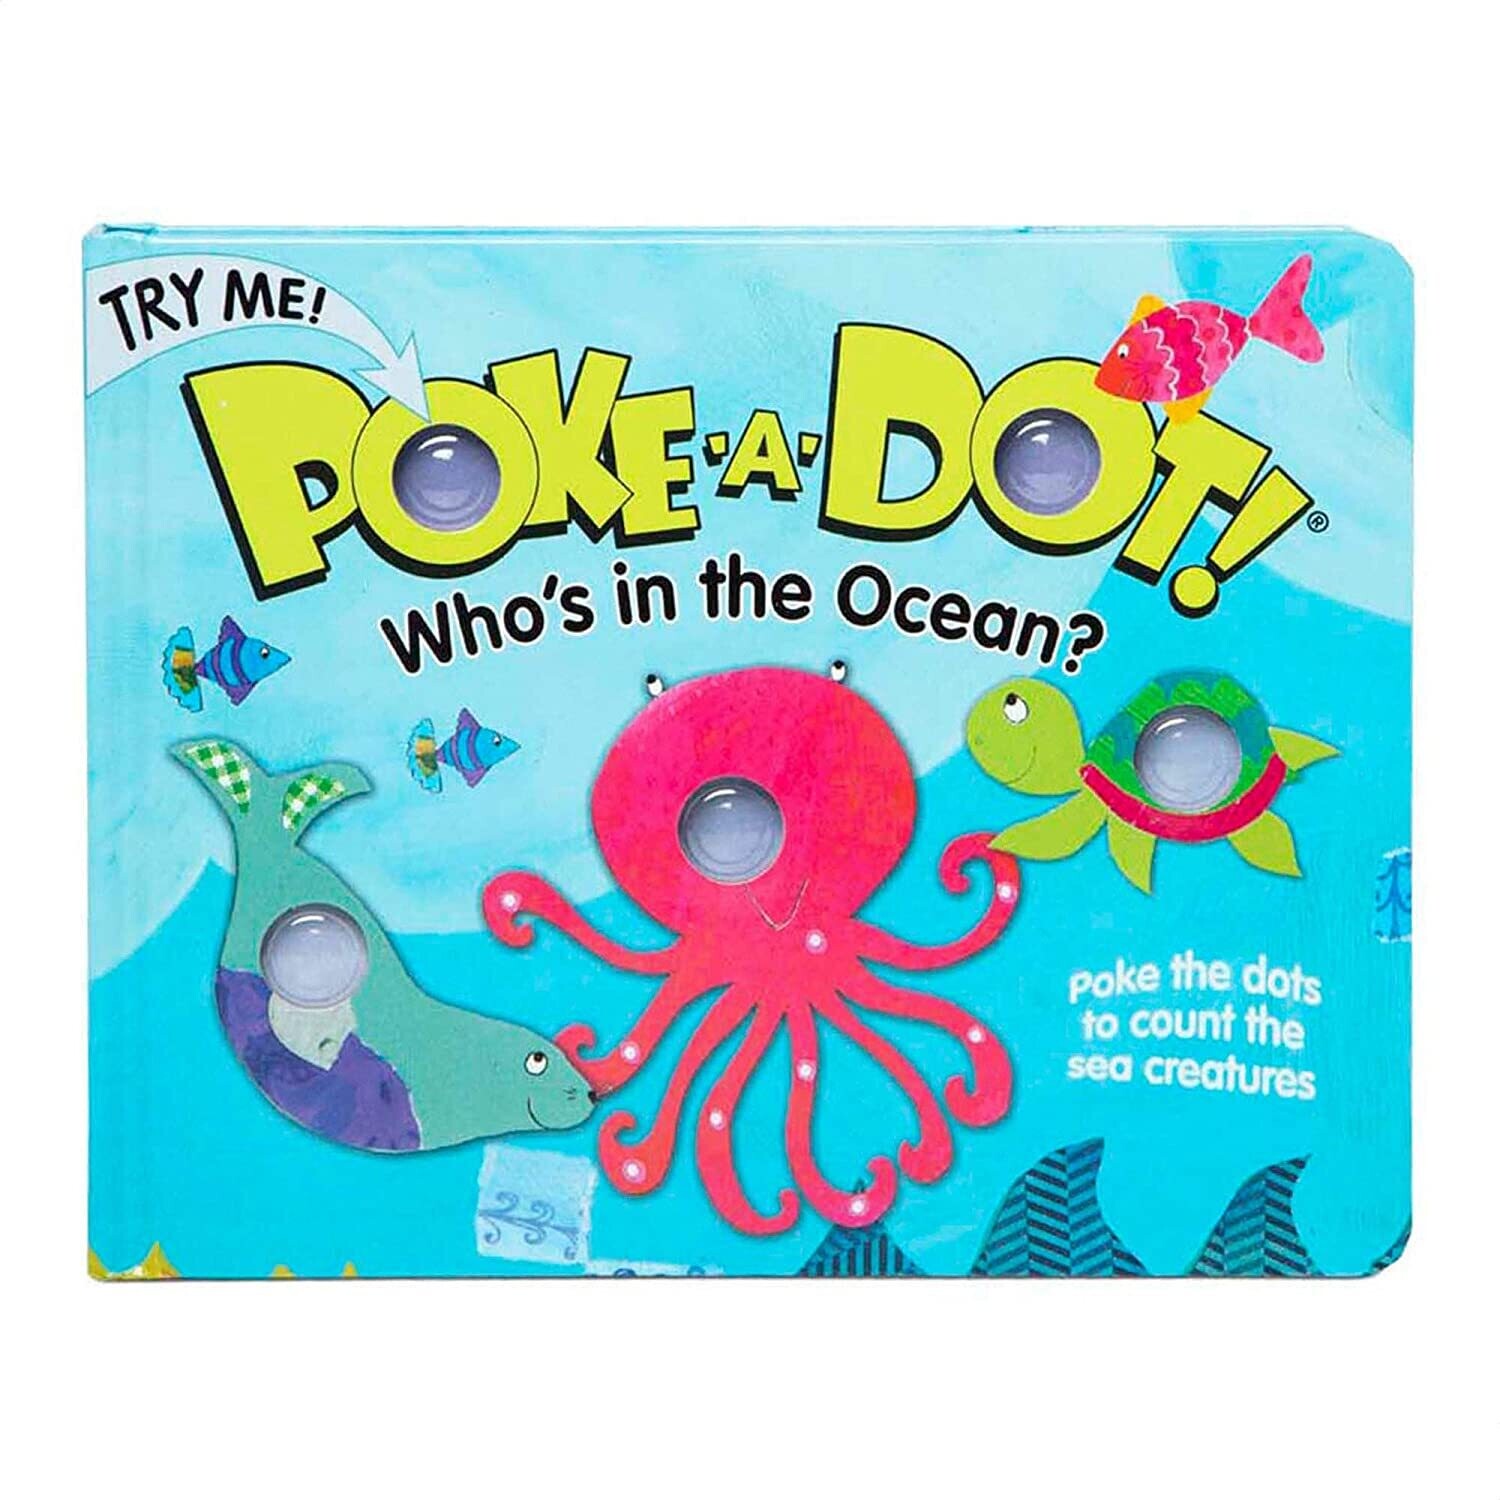 MD Poke A Dot Who's in the Ocean